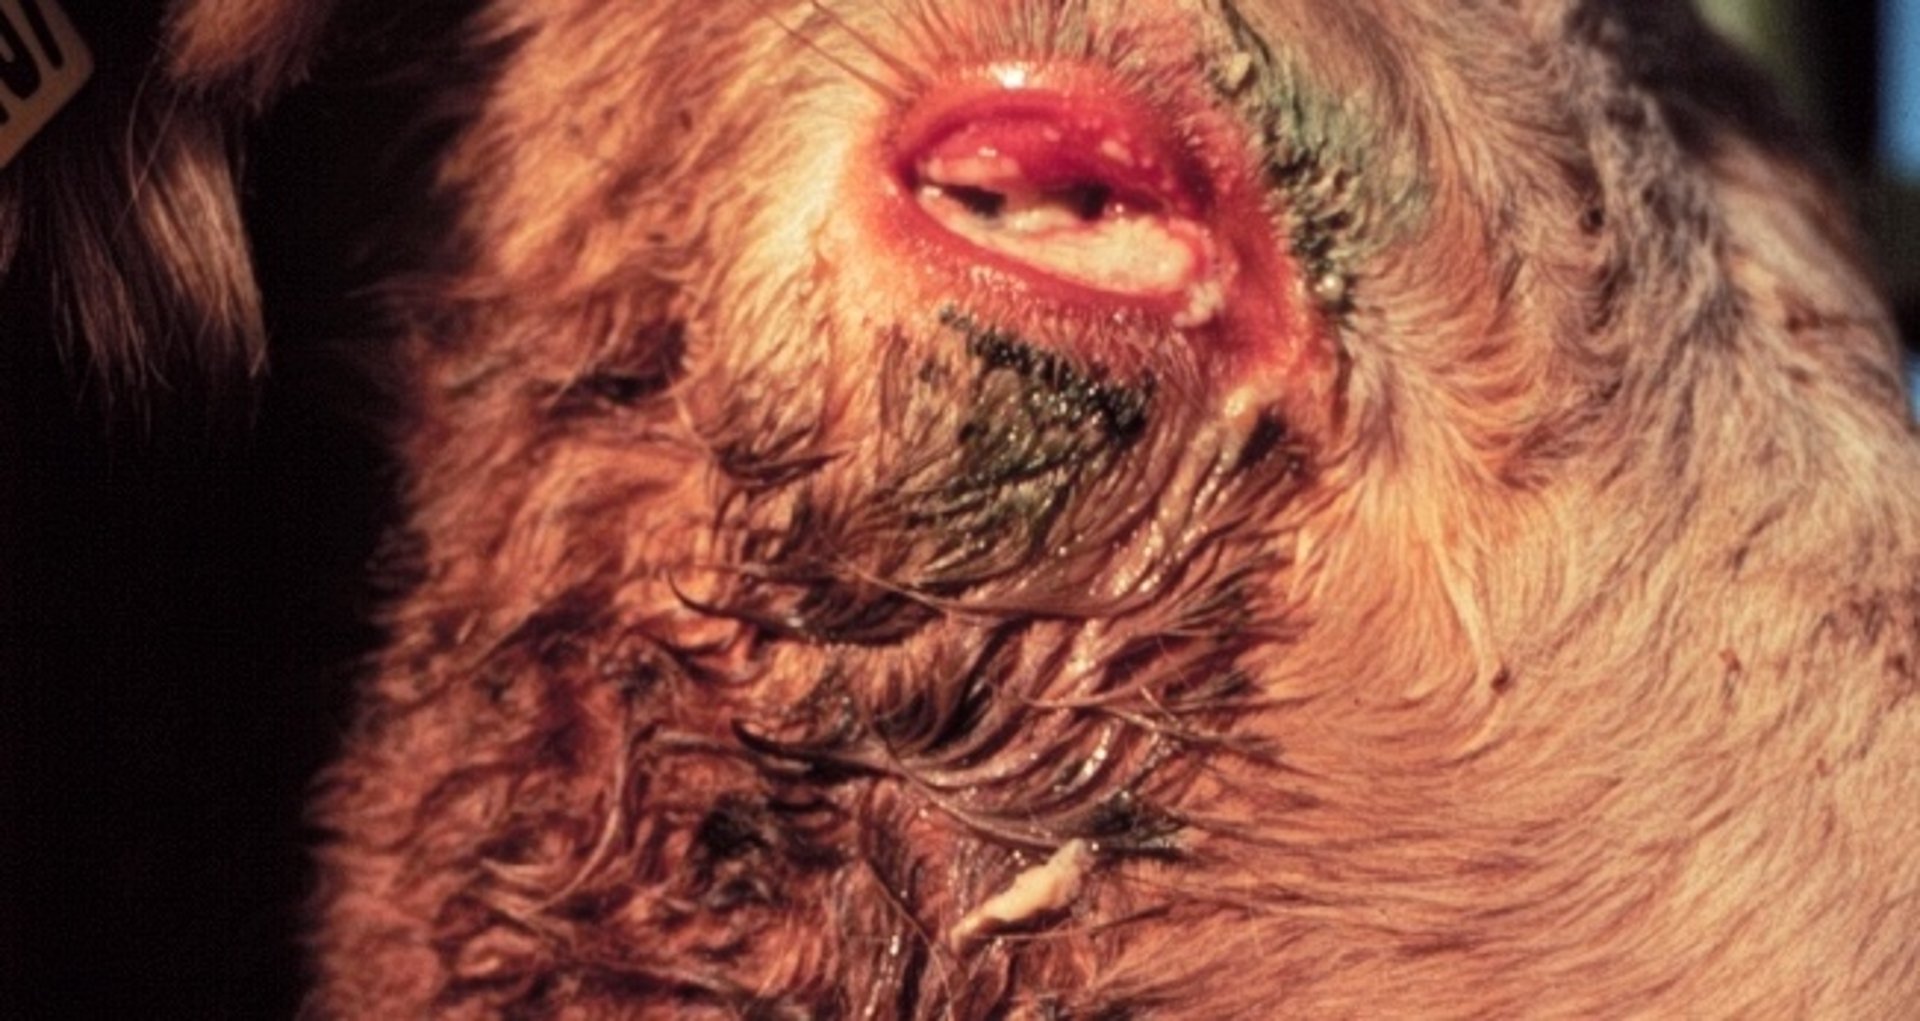 Infectious bovine rhinotracheitis conjunctivitis, bovine